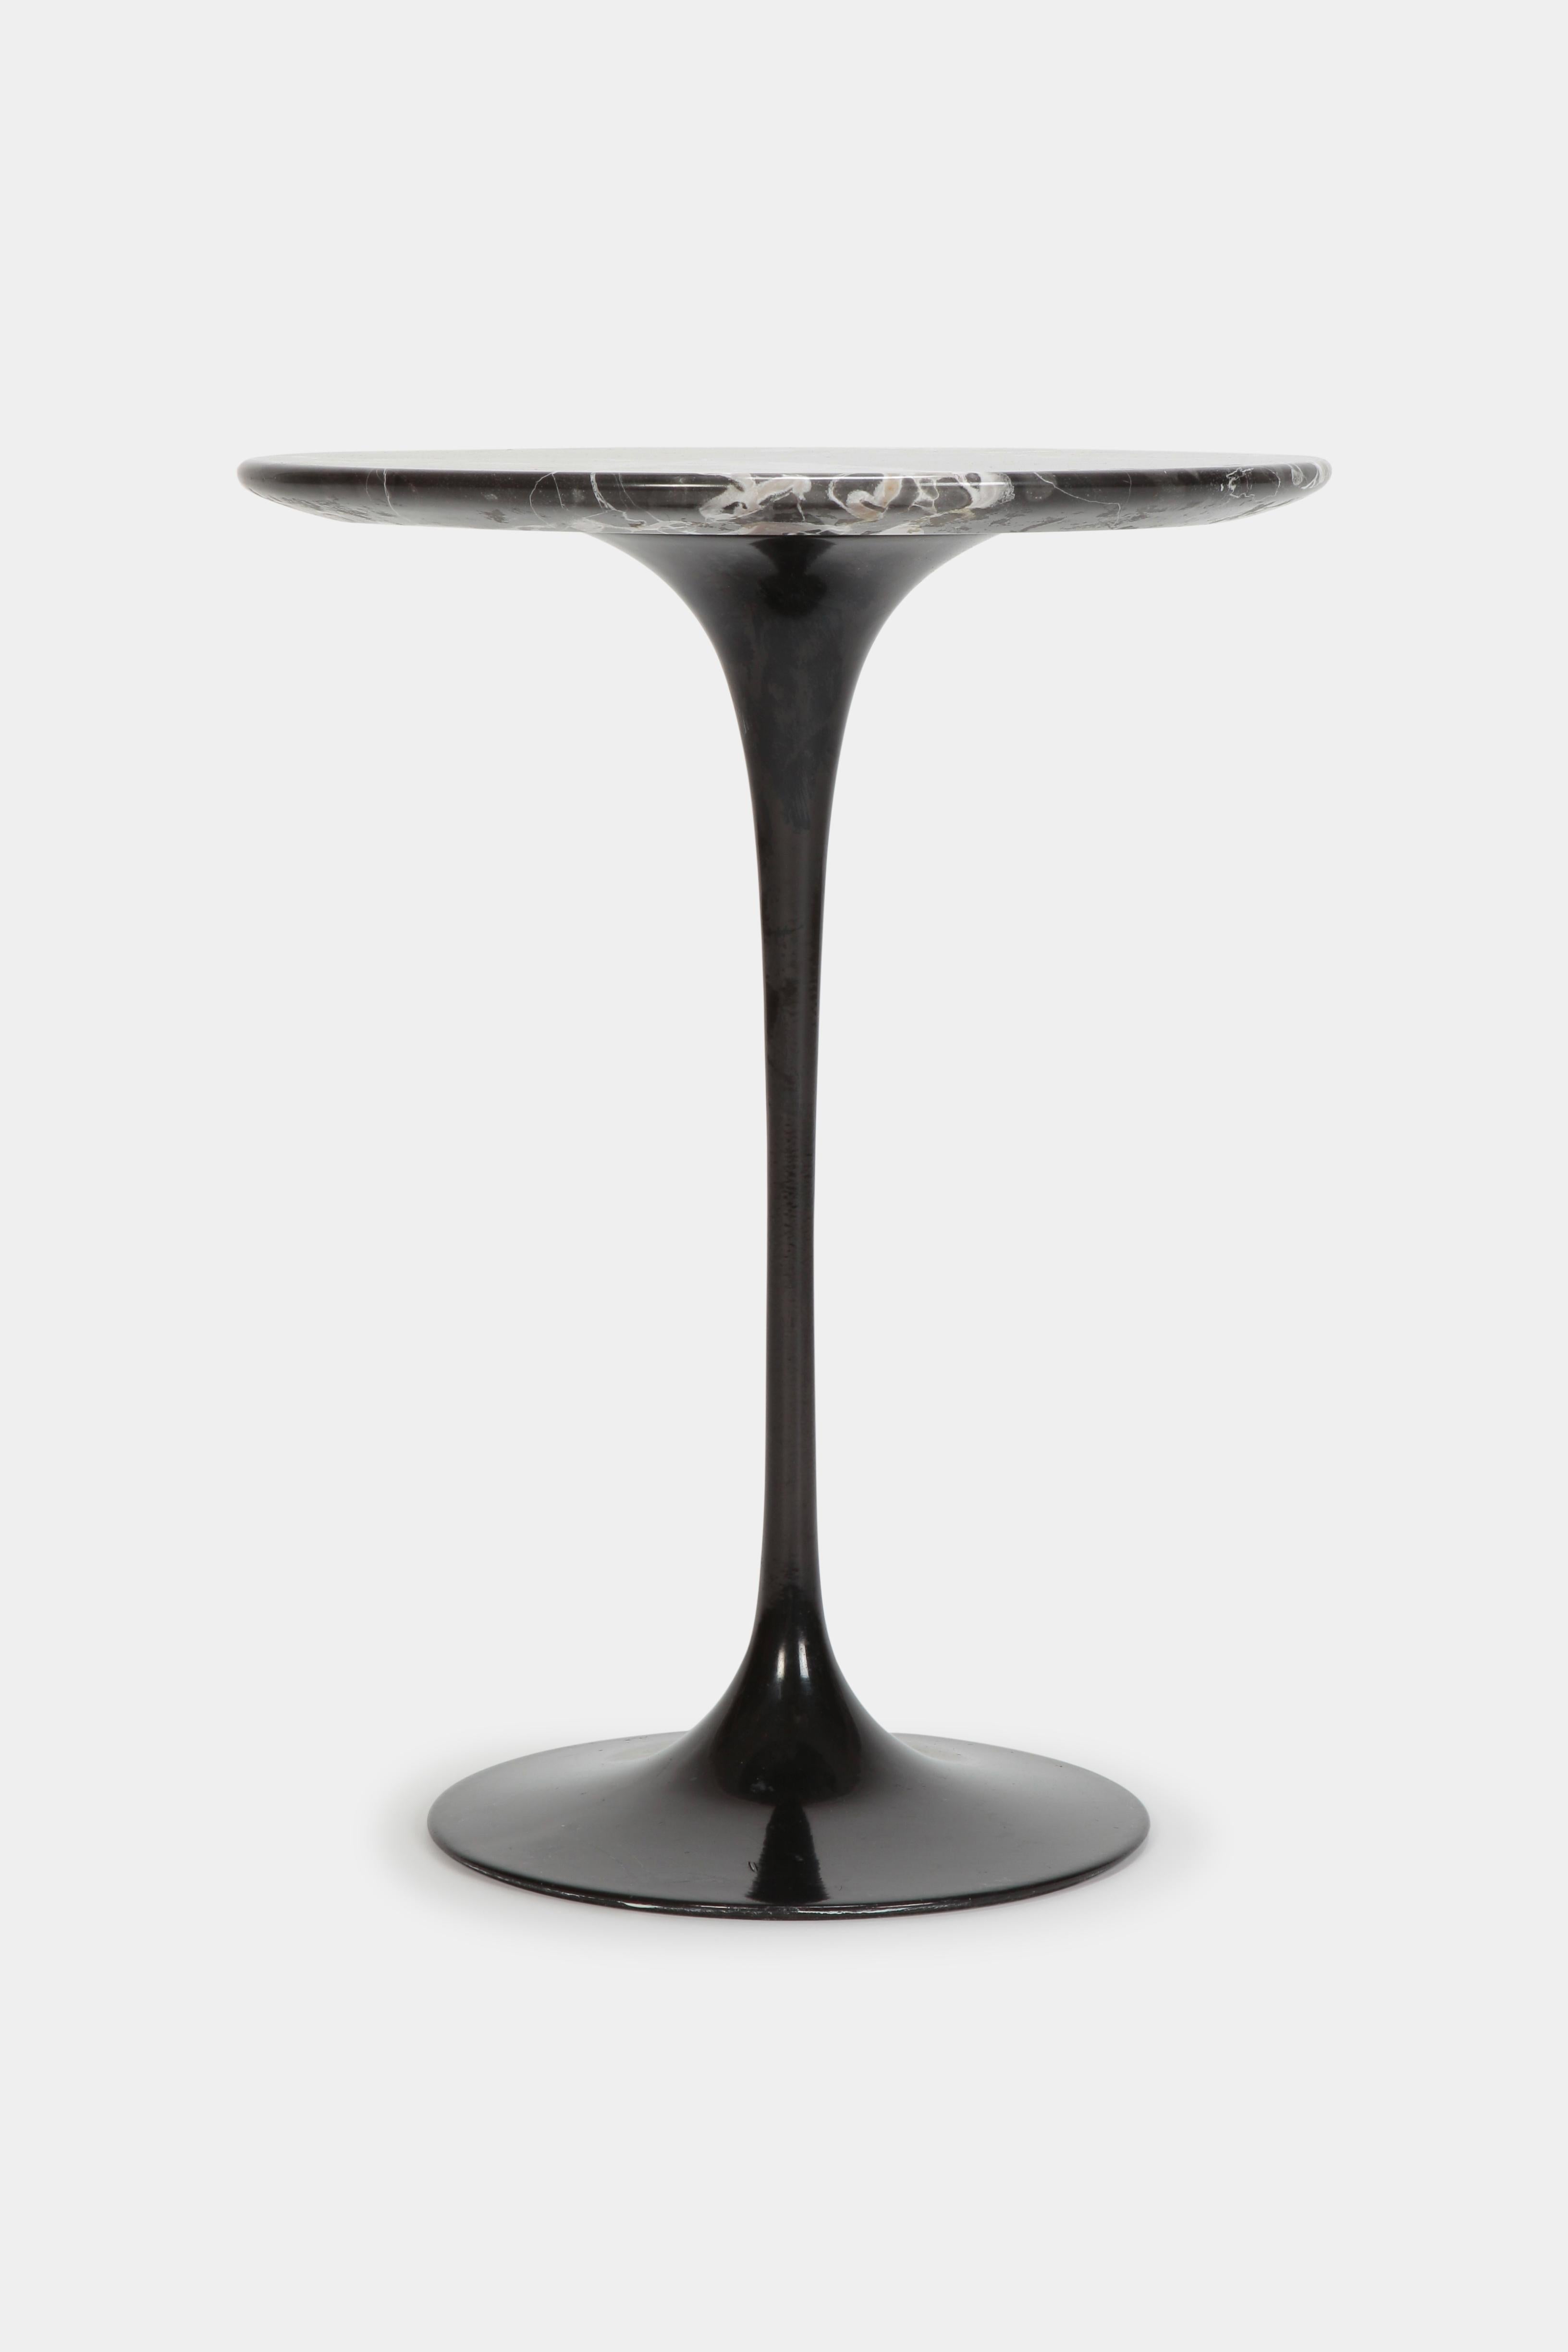 American Eero Saarinen “Tulip” Side Table Knoll International, 1970s